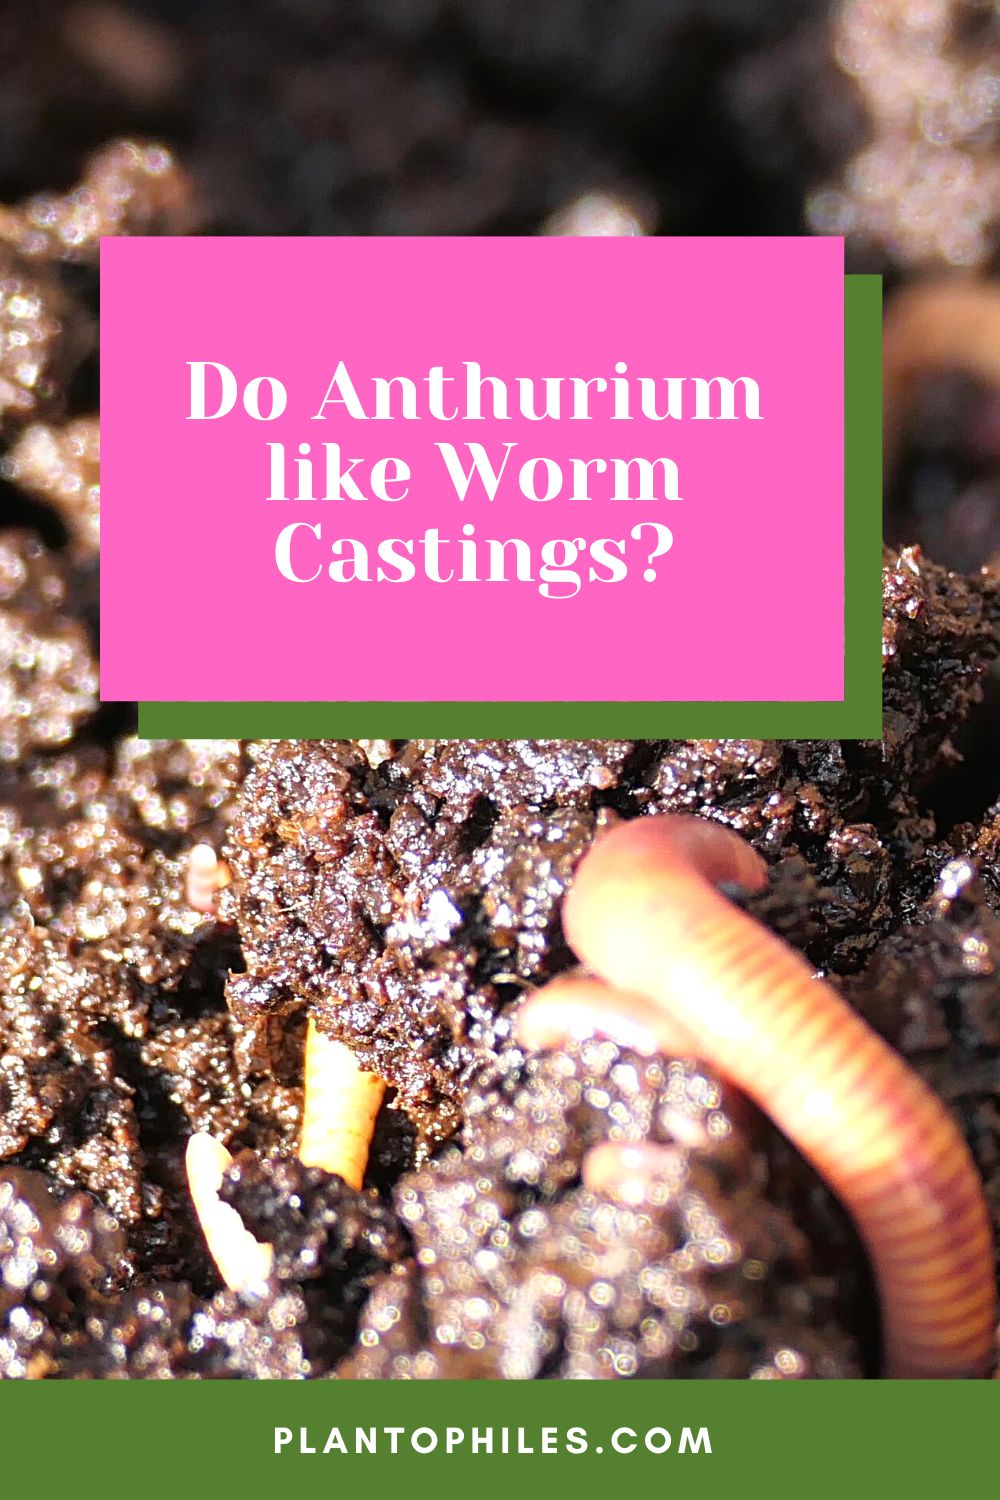 Do Anthurium like Worm Castings?